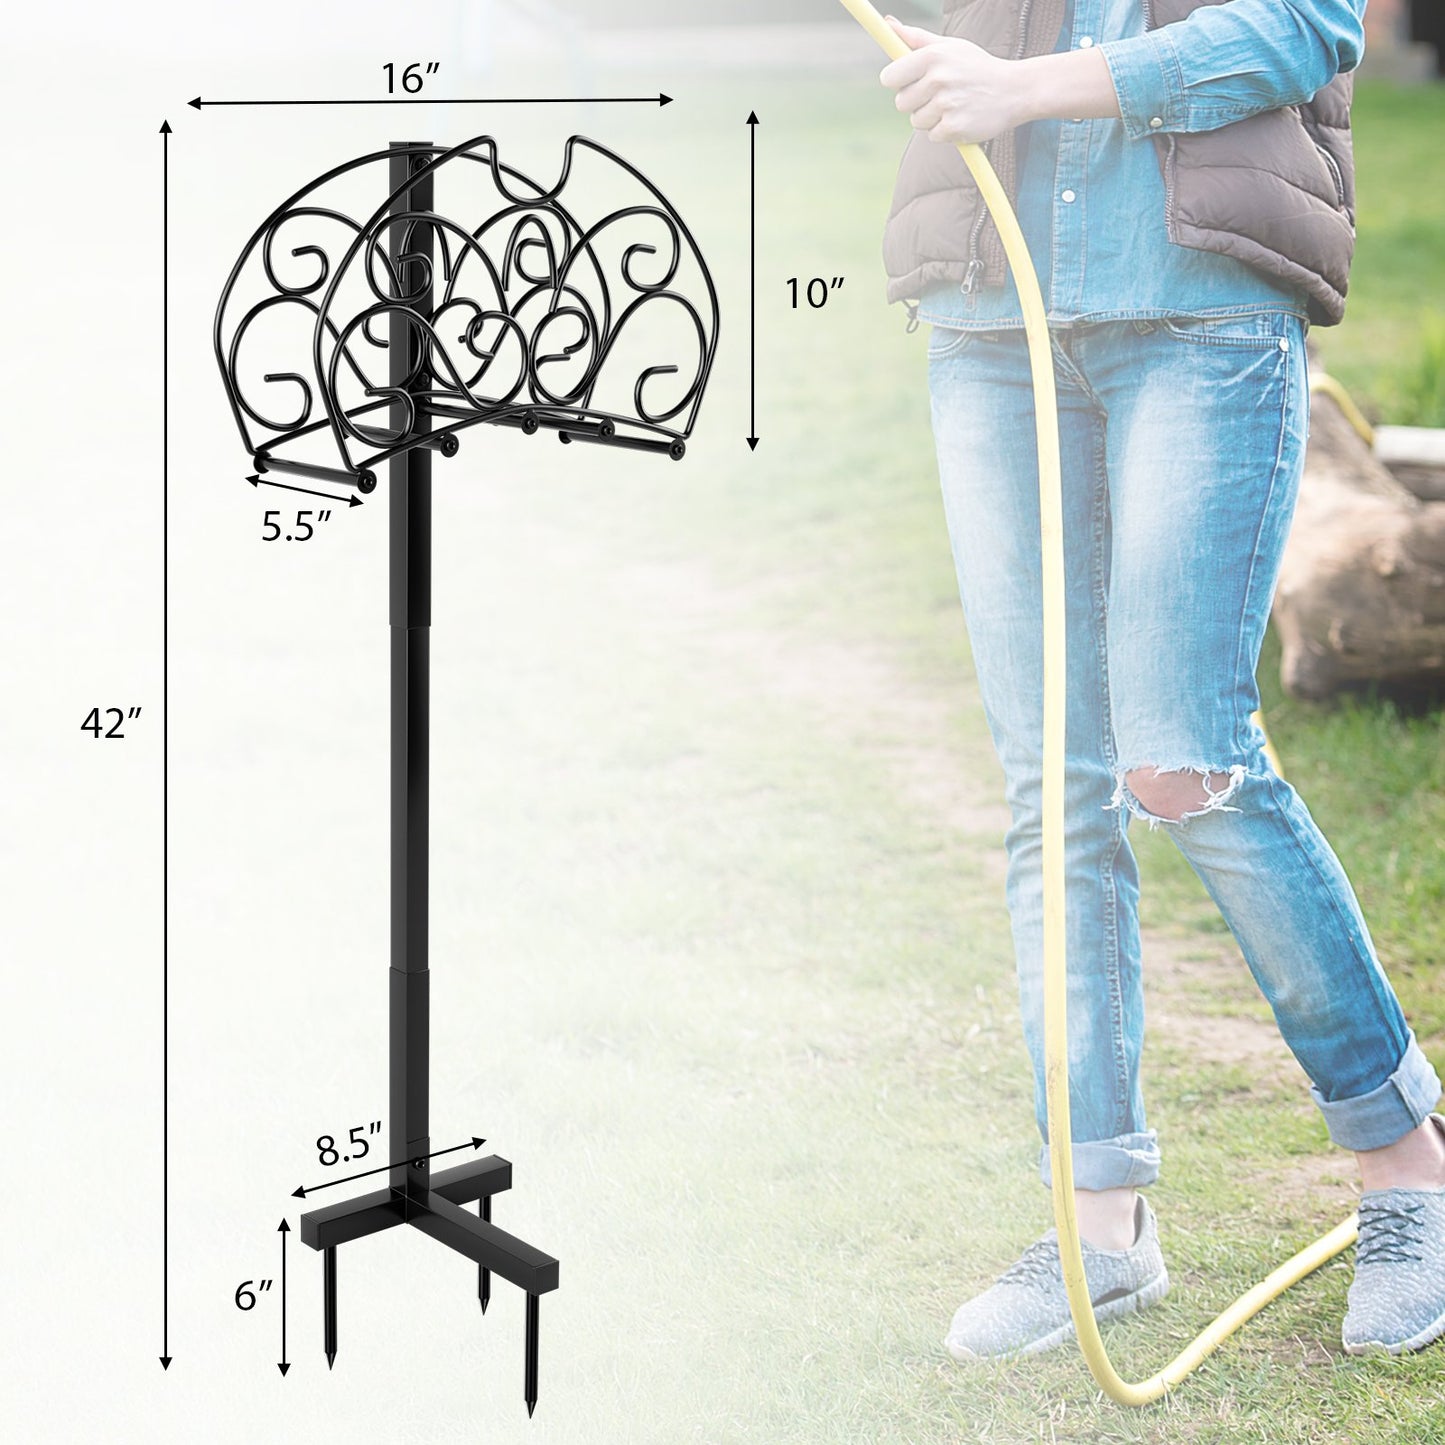 Detachable Freestanding Hose Holder for Outdoor Yard Garden Lawn, Black